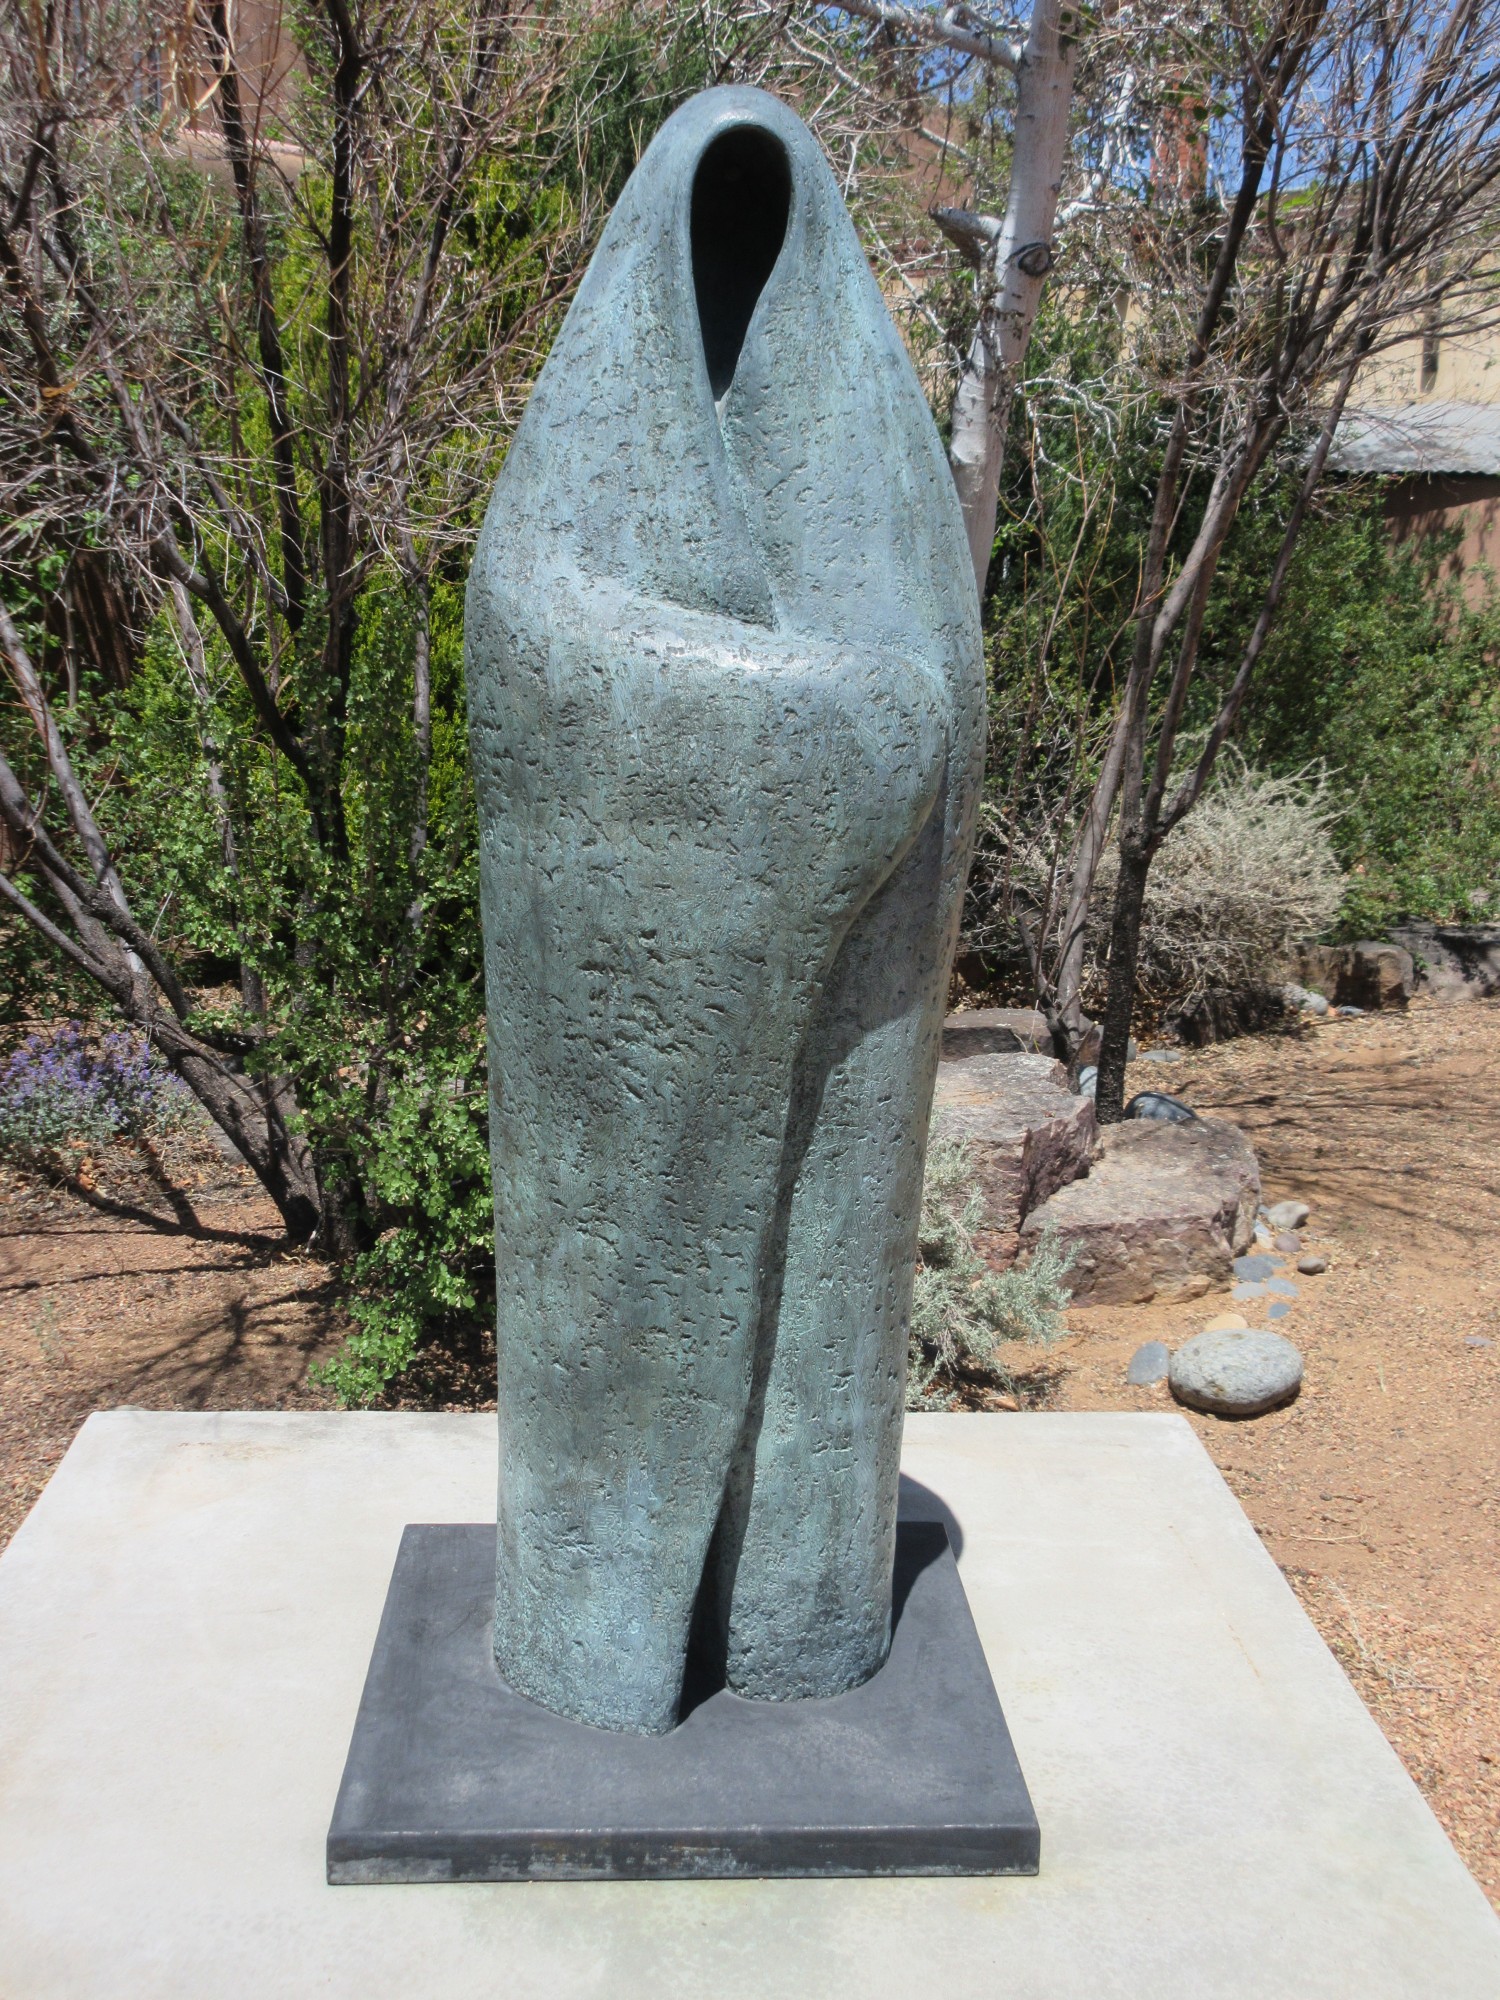 Santa Fe - Museum of Contemporary Native Arts - 'Forever' | New Mexico